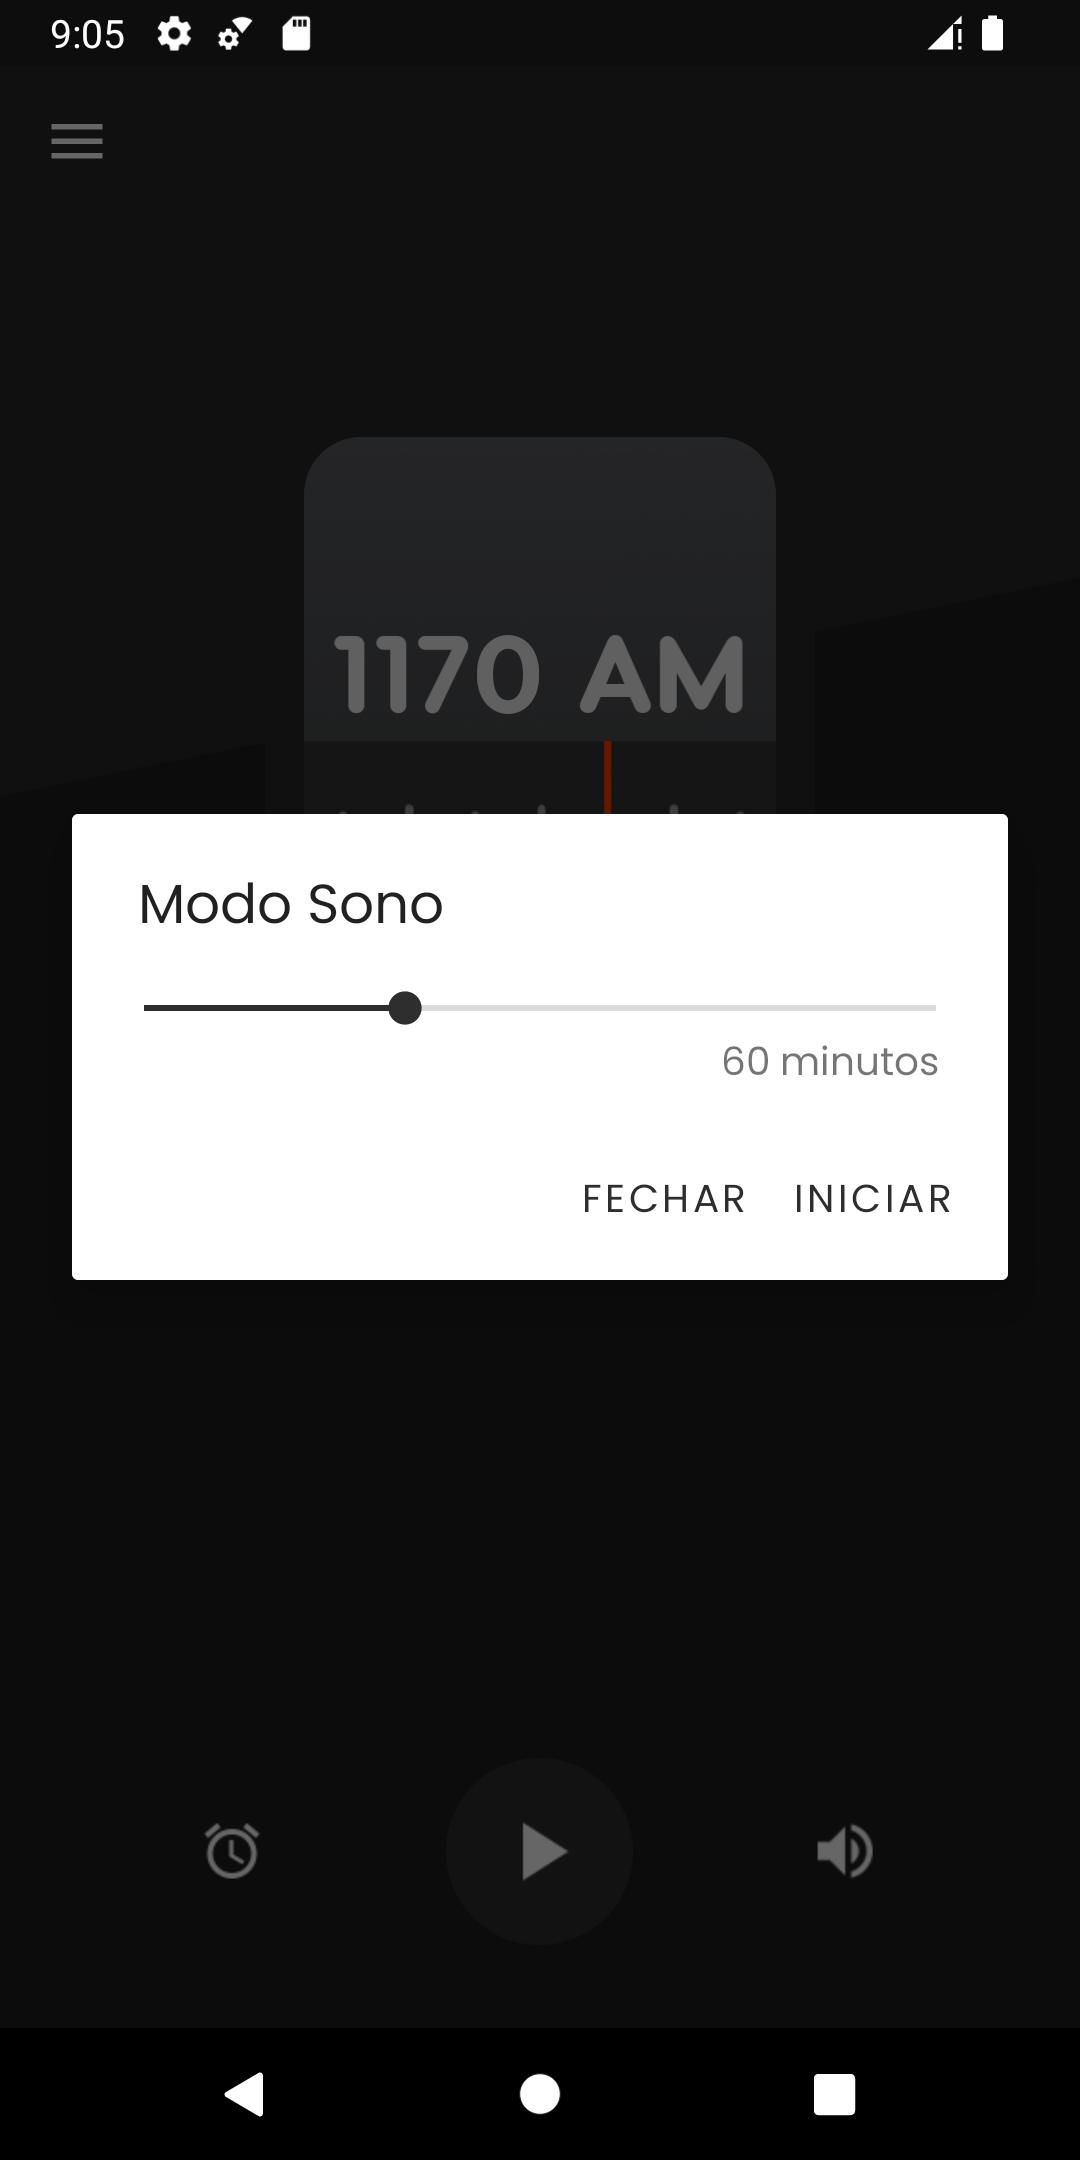 Rádio Caiobá FM Curitiba APK for Android - Latest Version (Free Download)